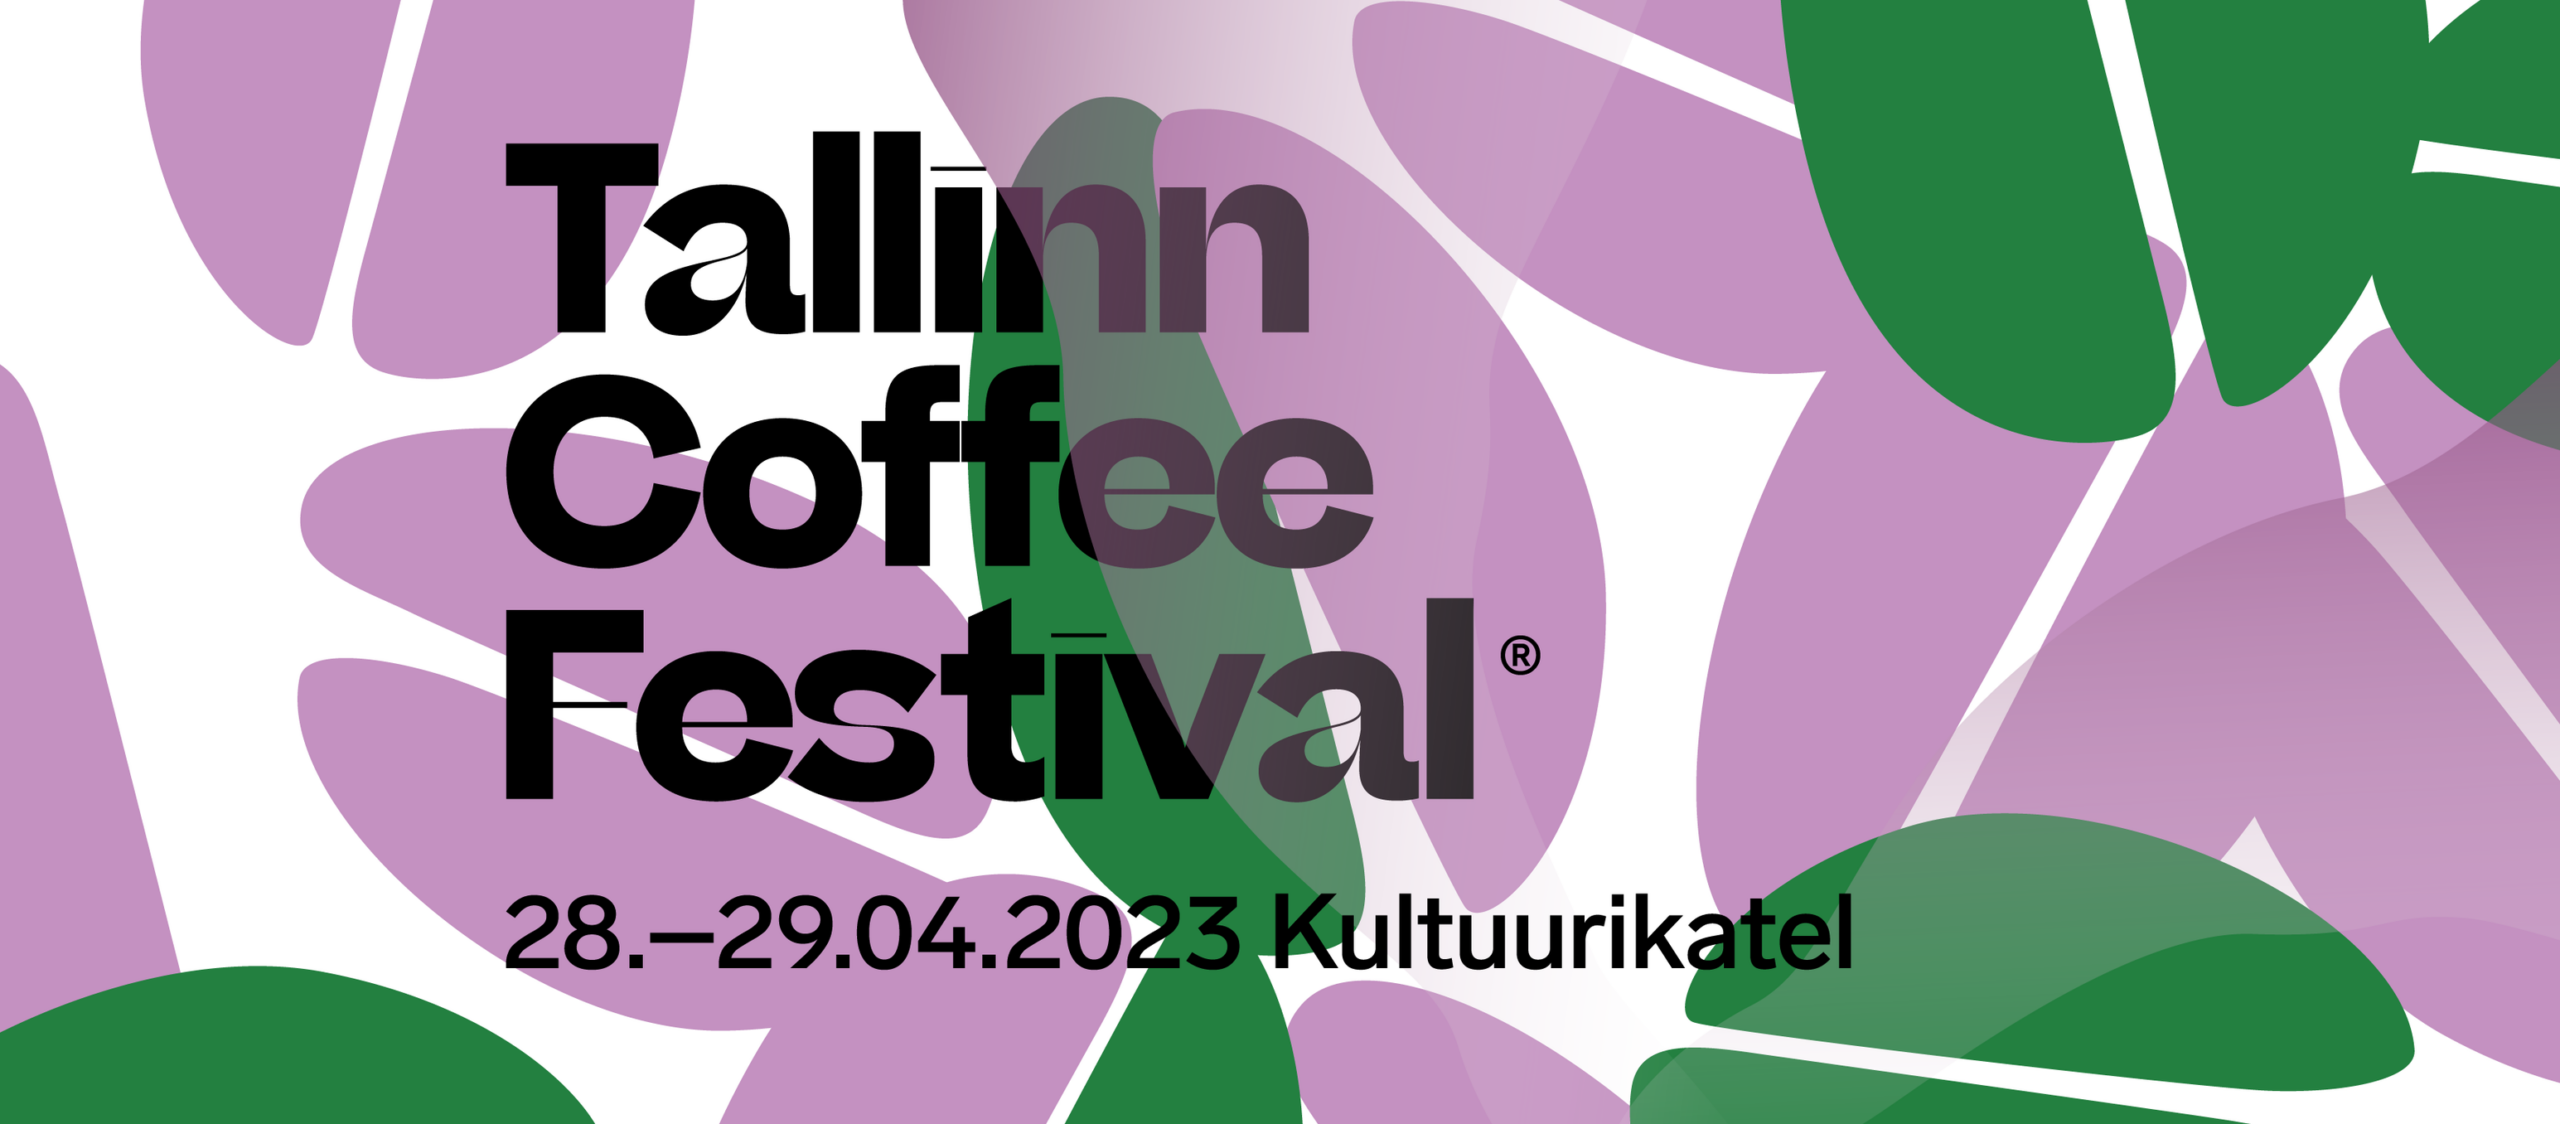 15579Tallinn Coffee Festival